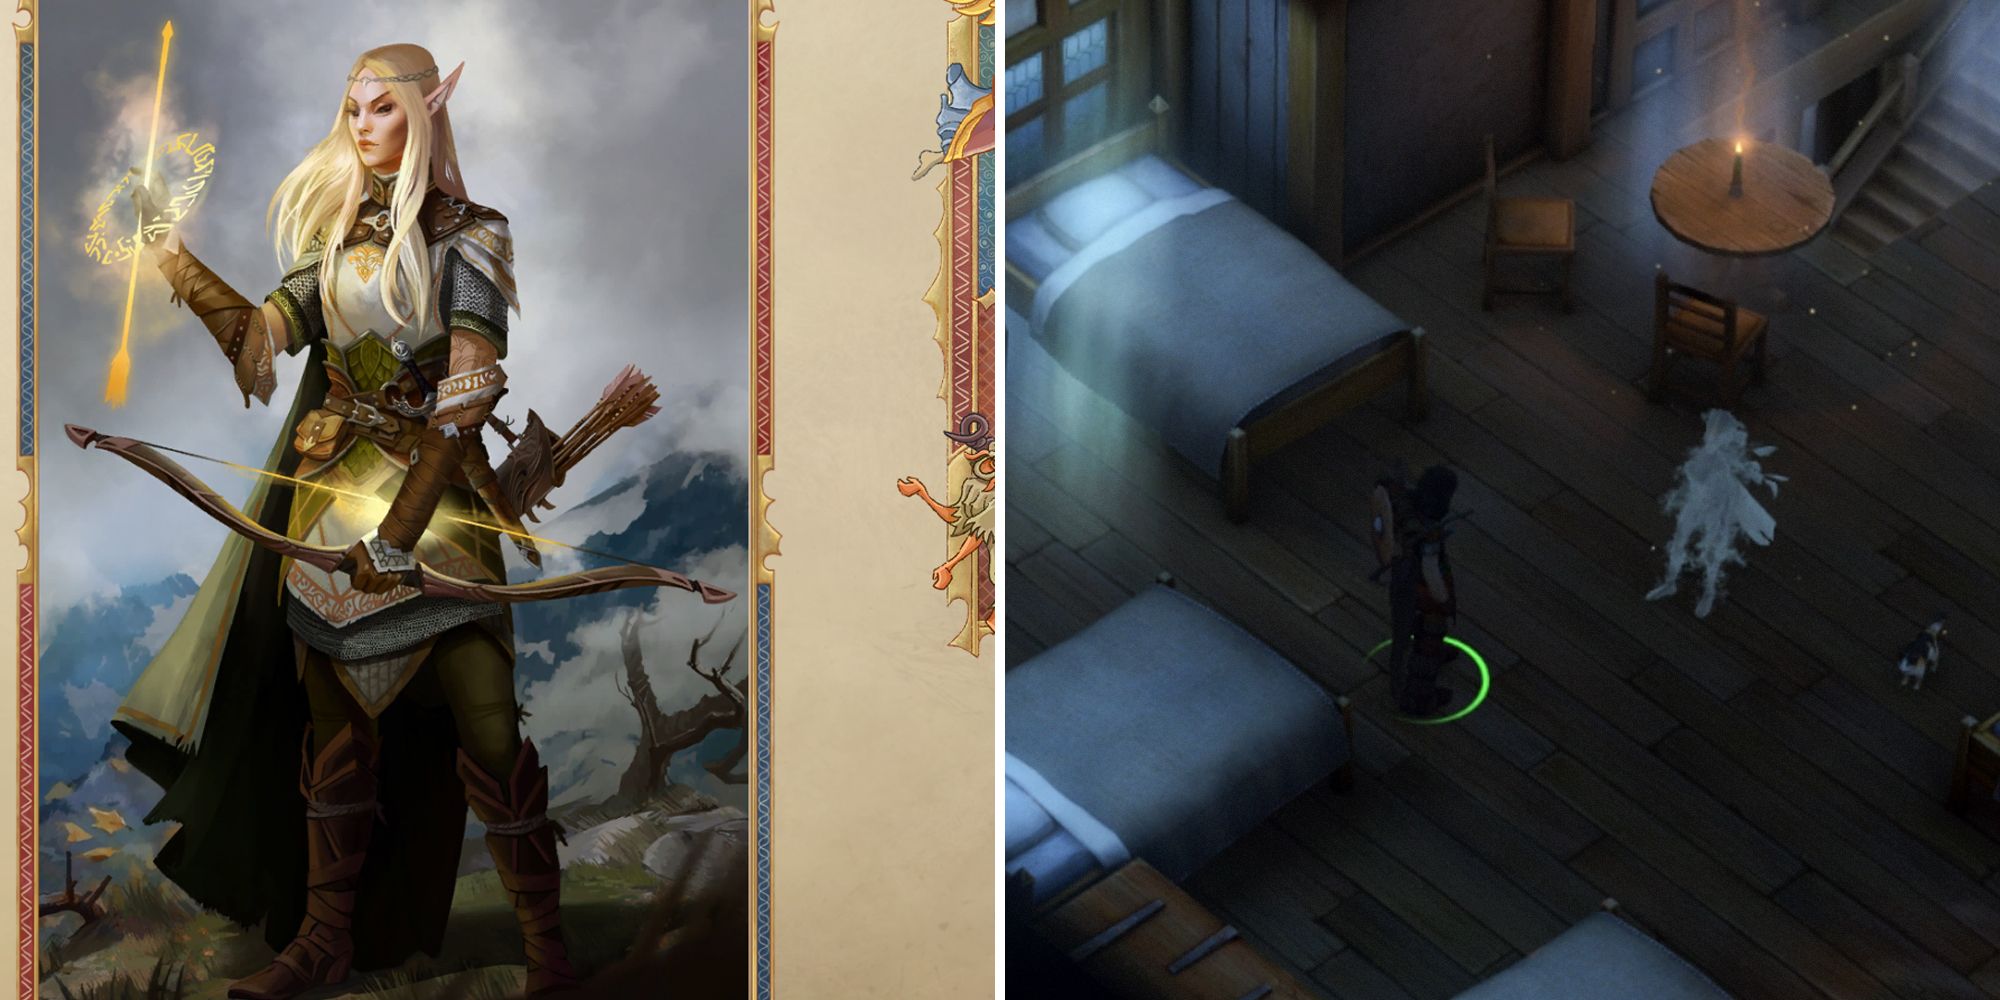 pathfinder: kingmaker split image. character portrait on left, protagonist speaking to npc on right.